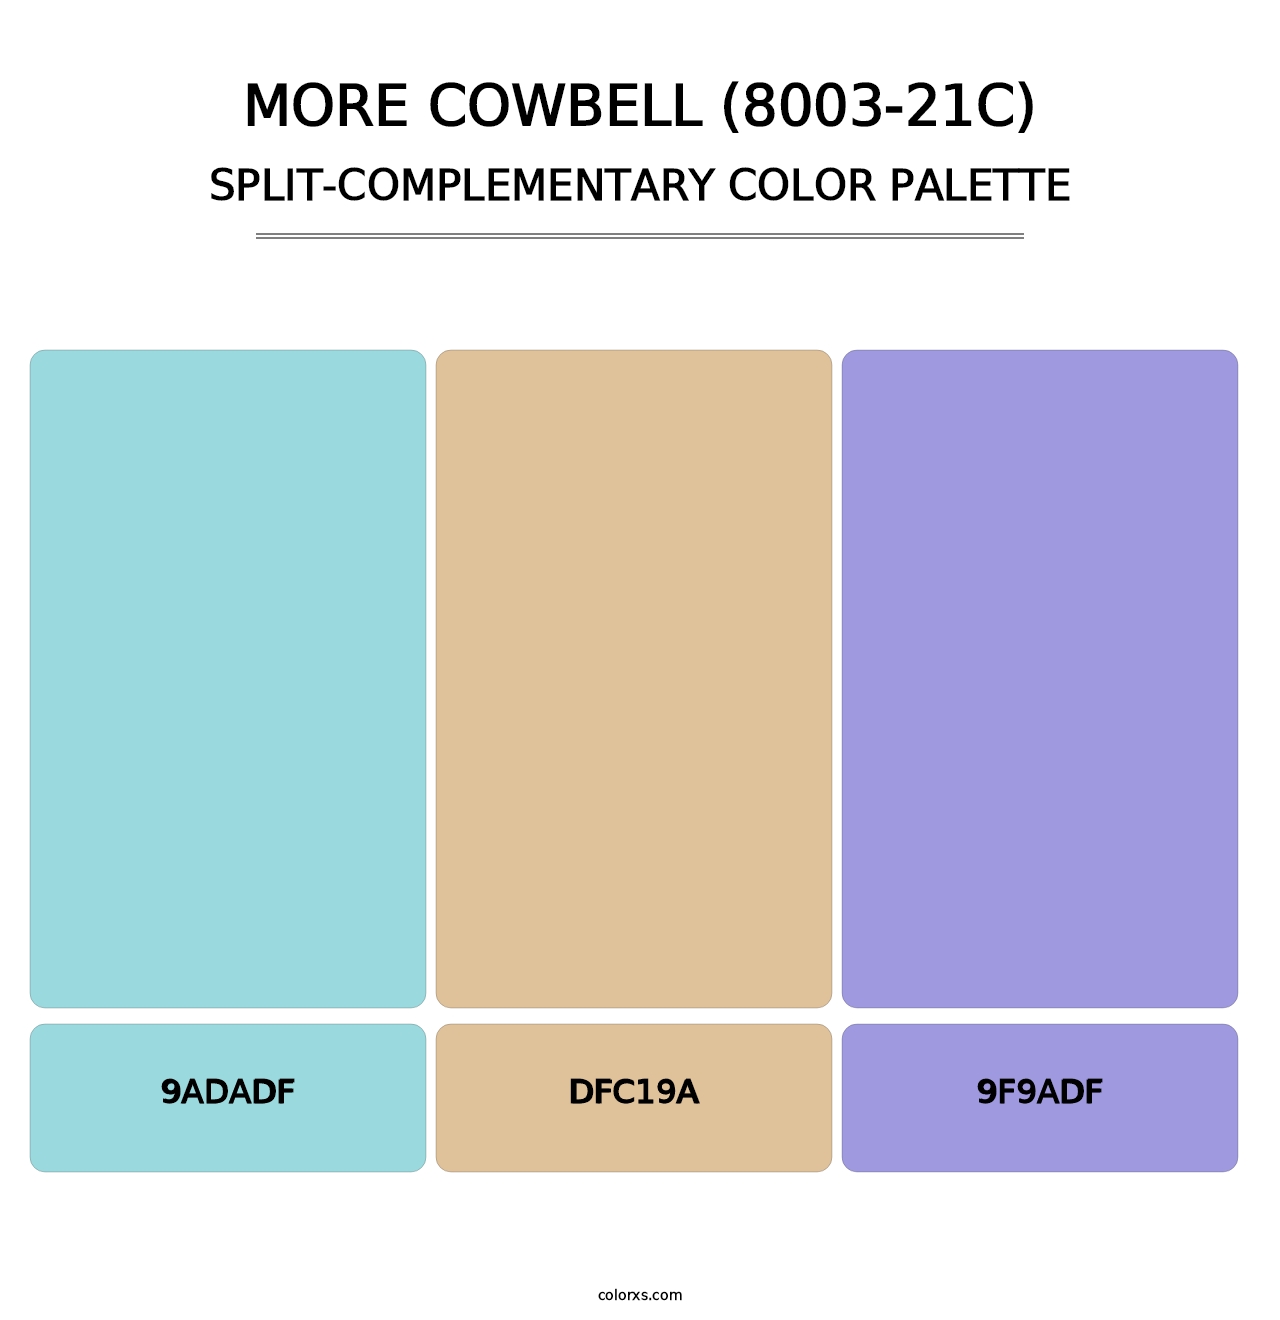 More Cowbell (8003-21C) - Split-Complementary Color Palette